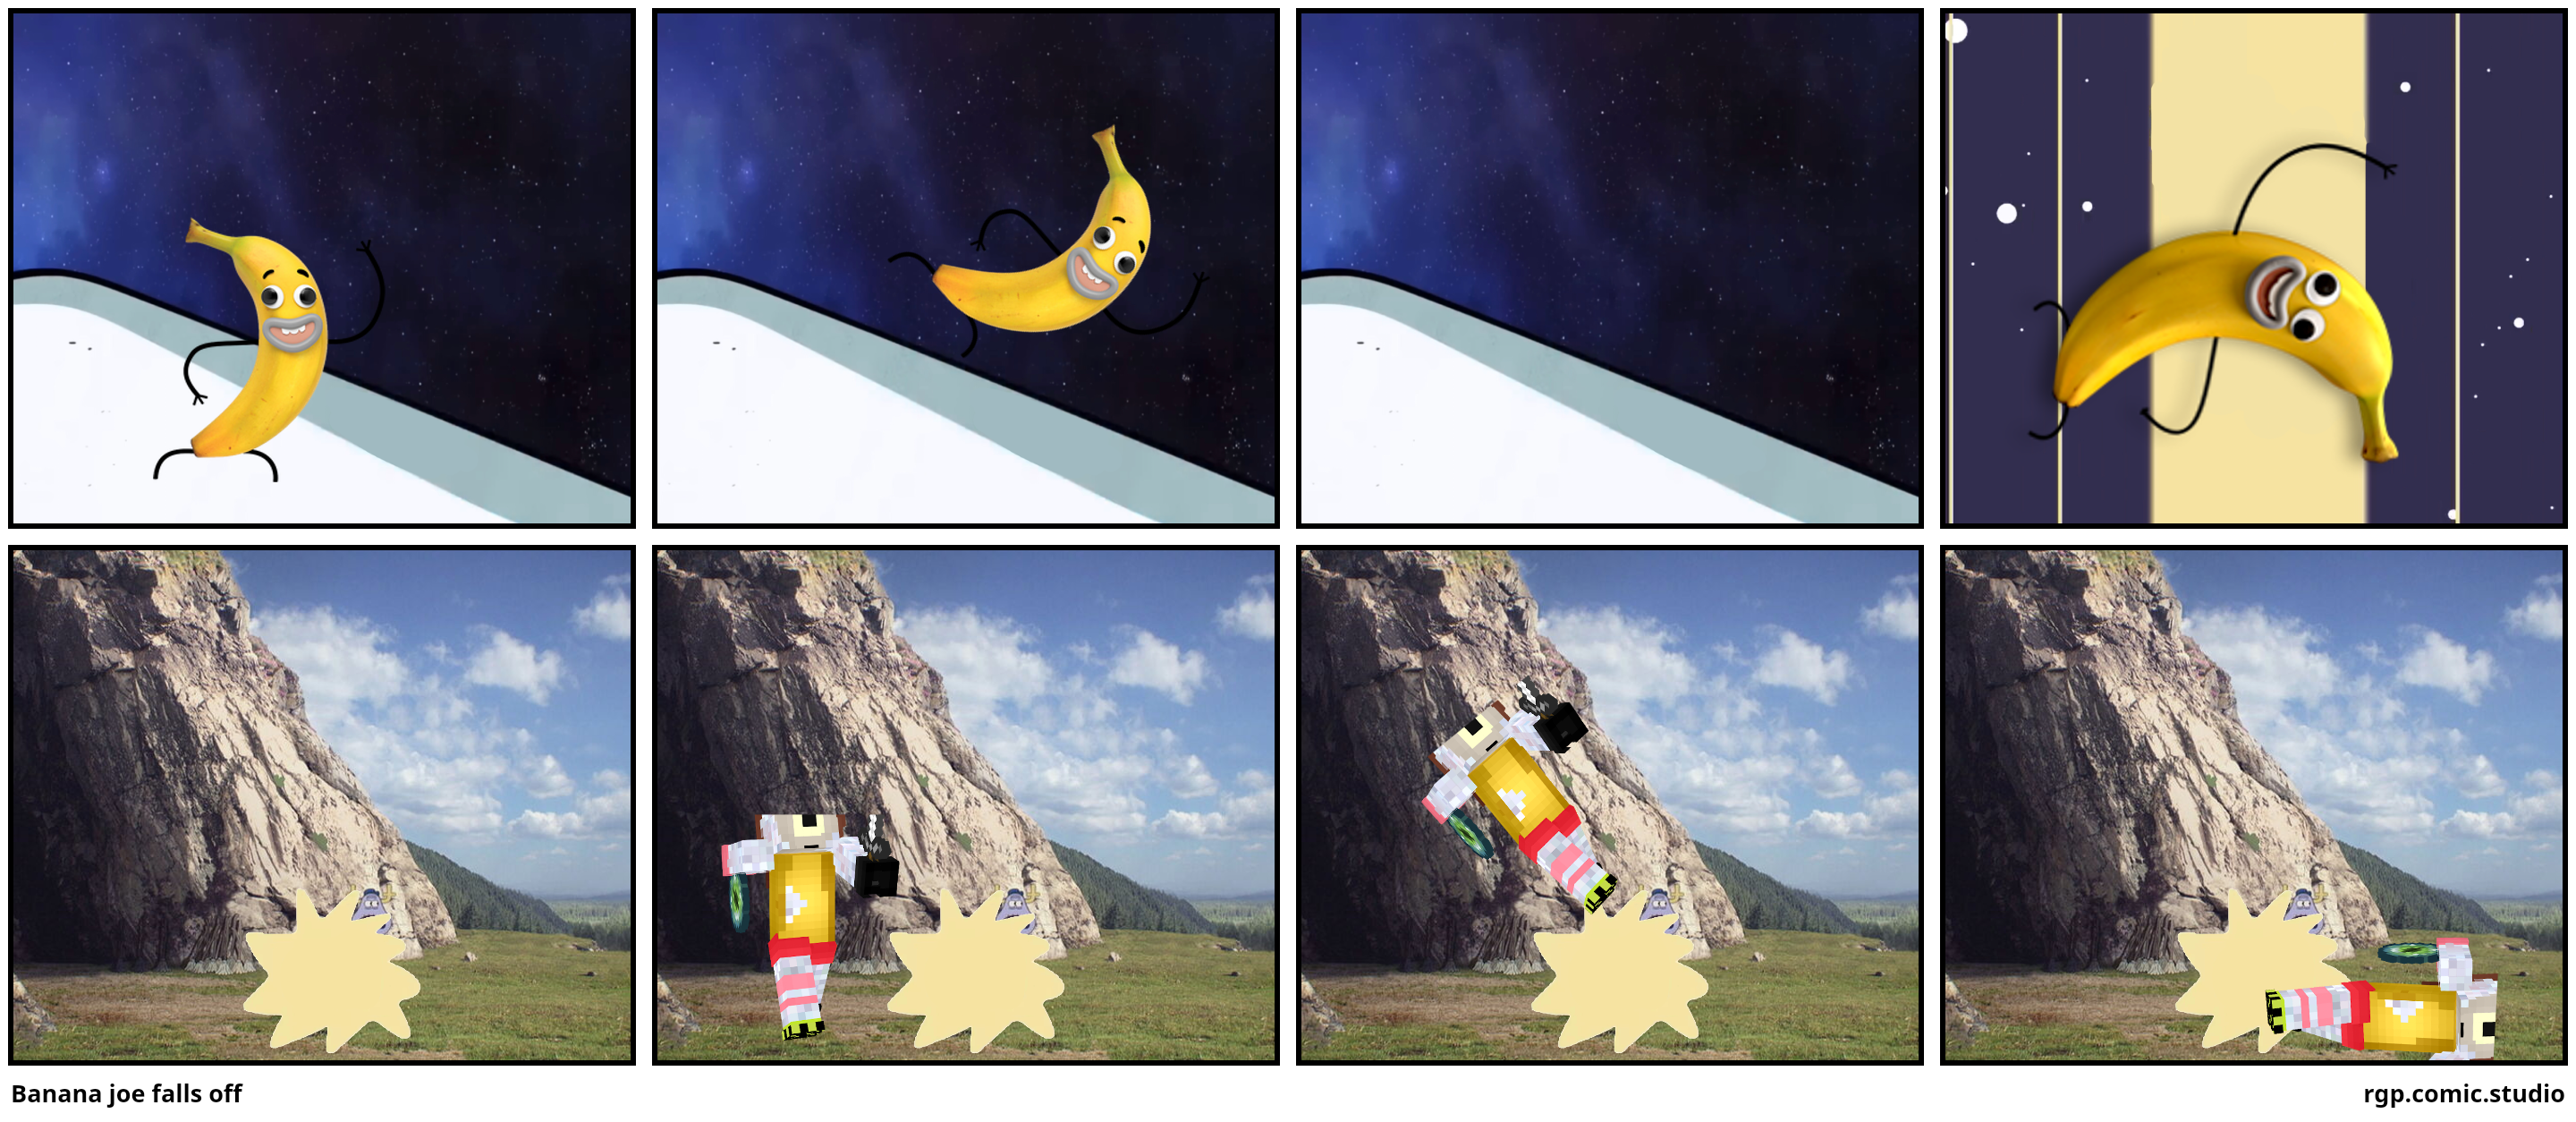 Banana joe falls off